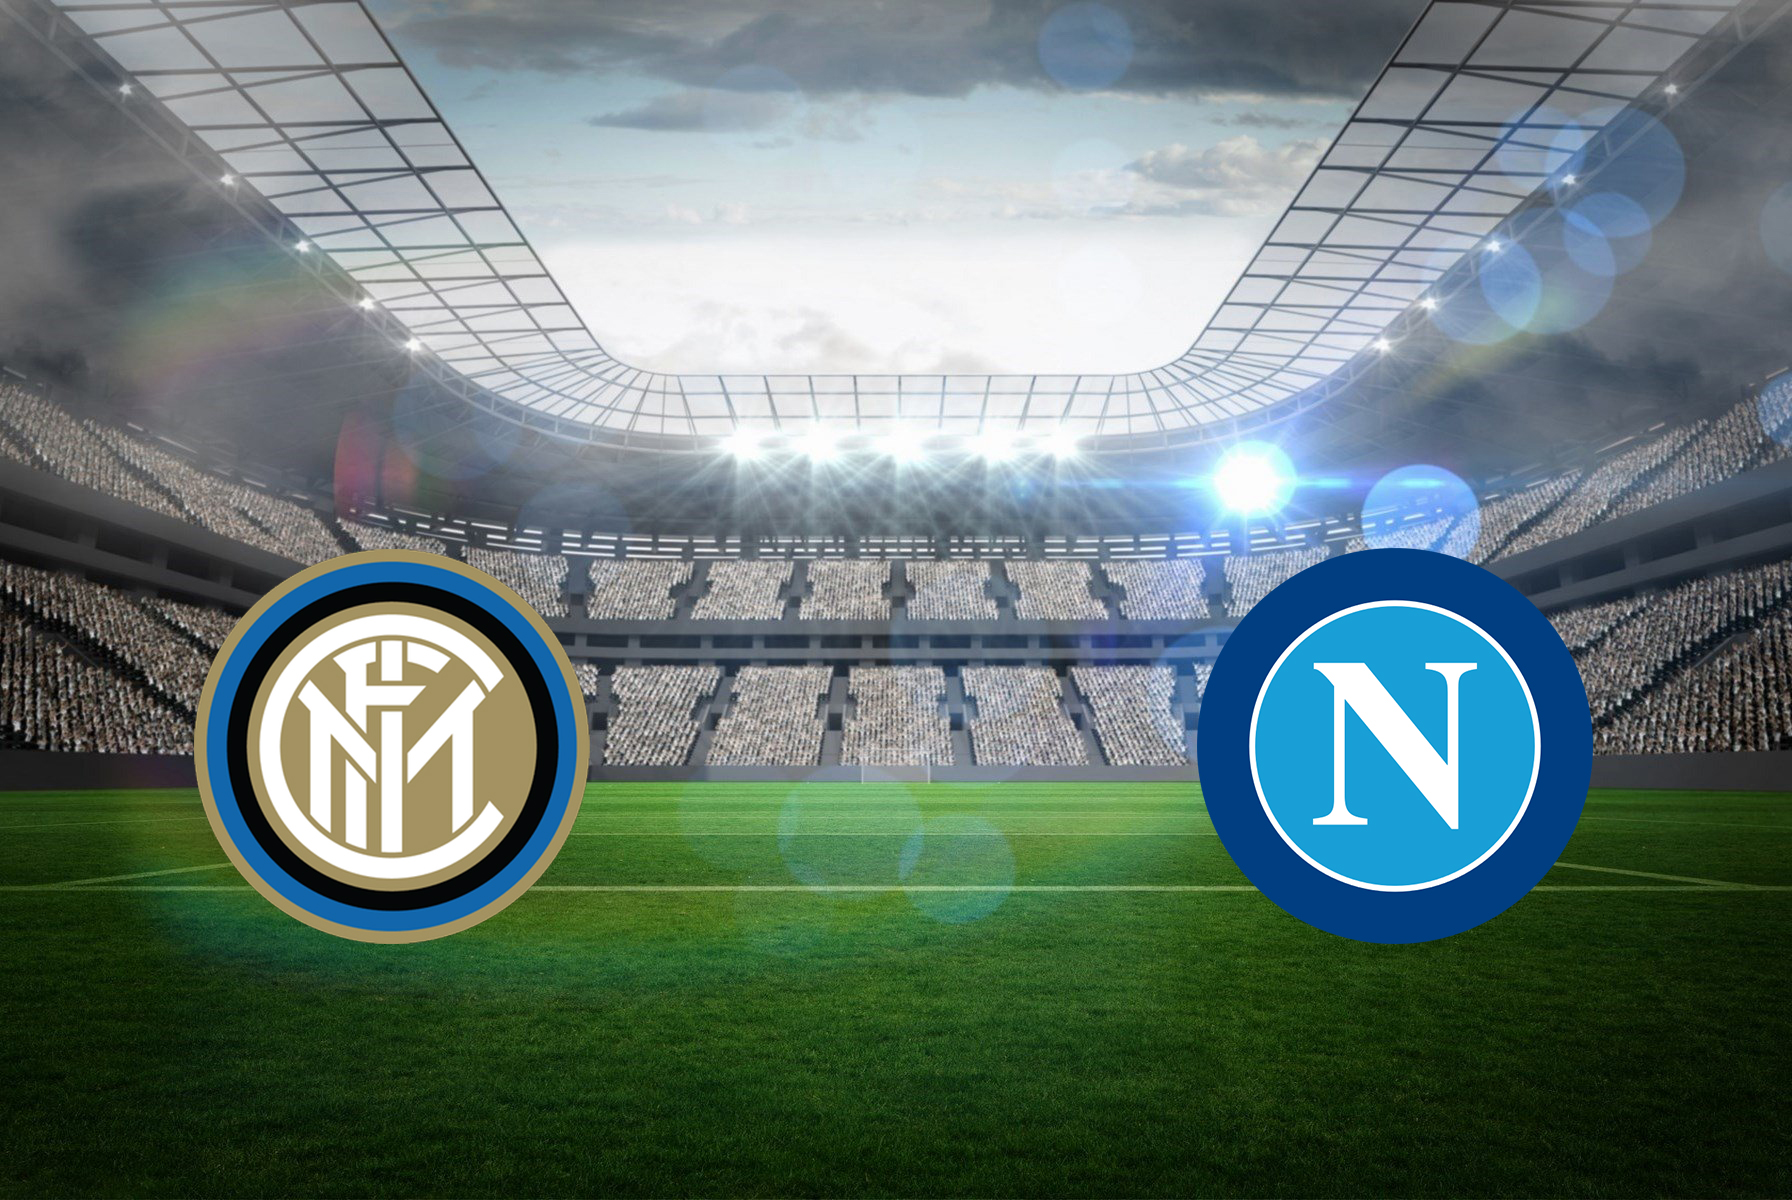 soi-keo-ca-cuoc-bong-da-ngay-9-2-Inter Milan-vs-Napoli-do-it-thang-do-nhieu-b9 1